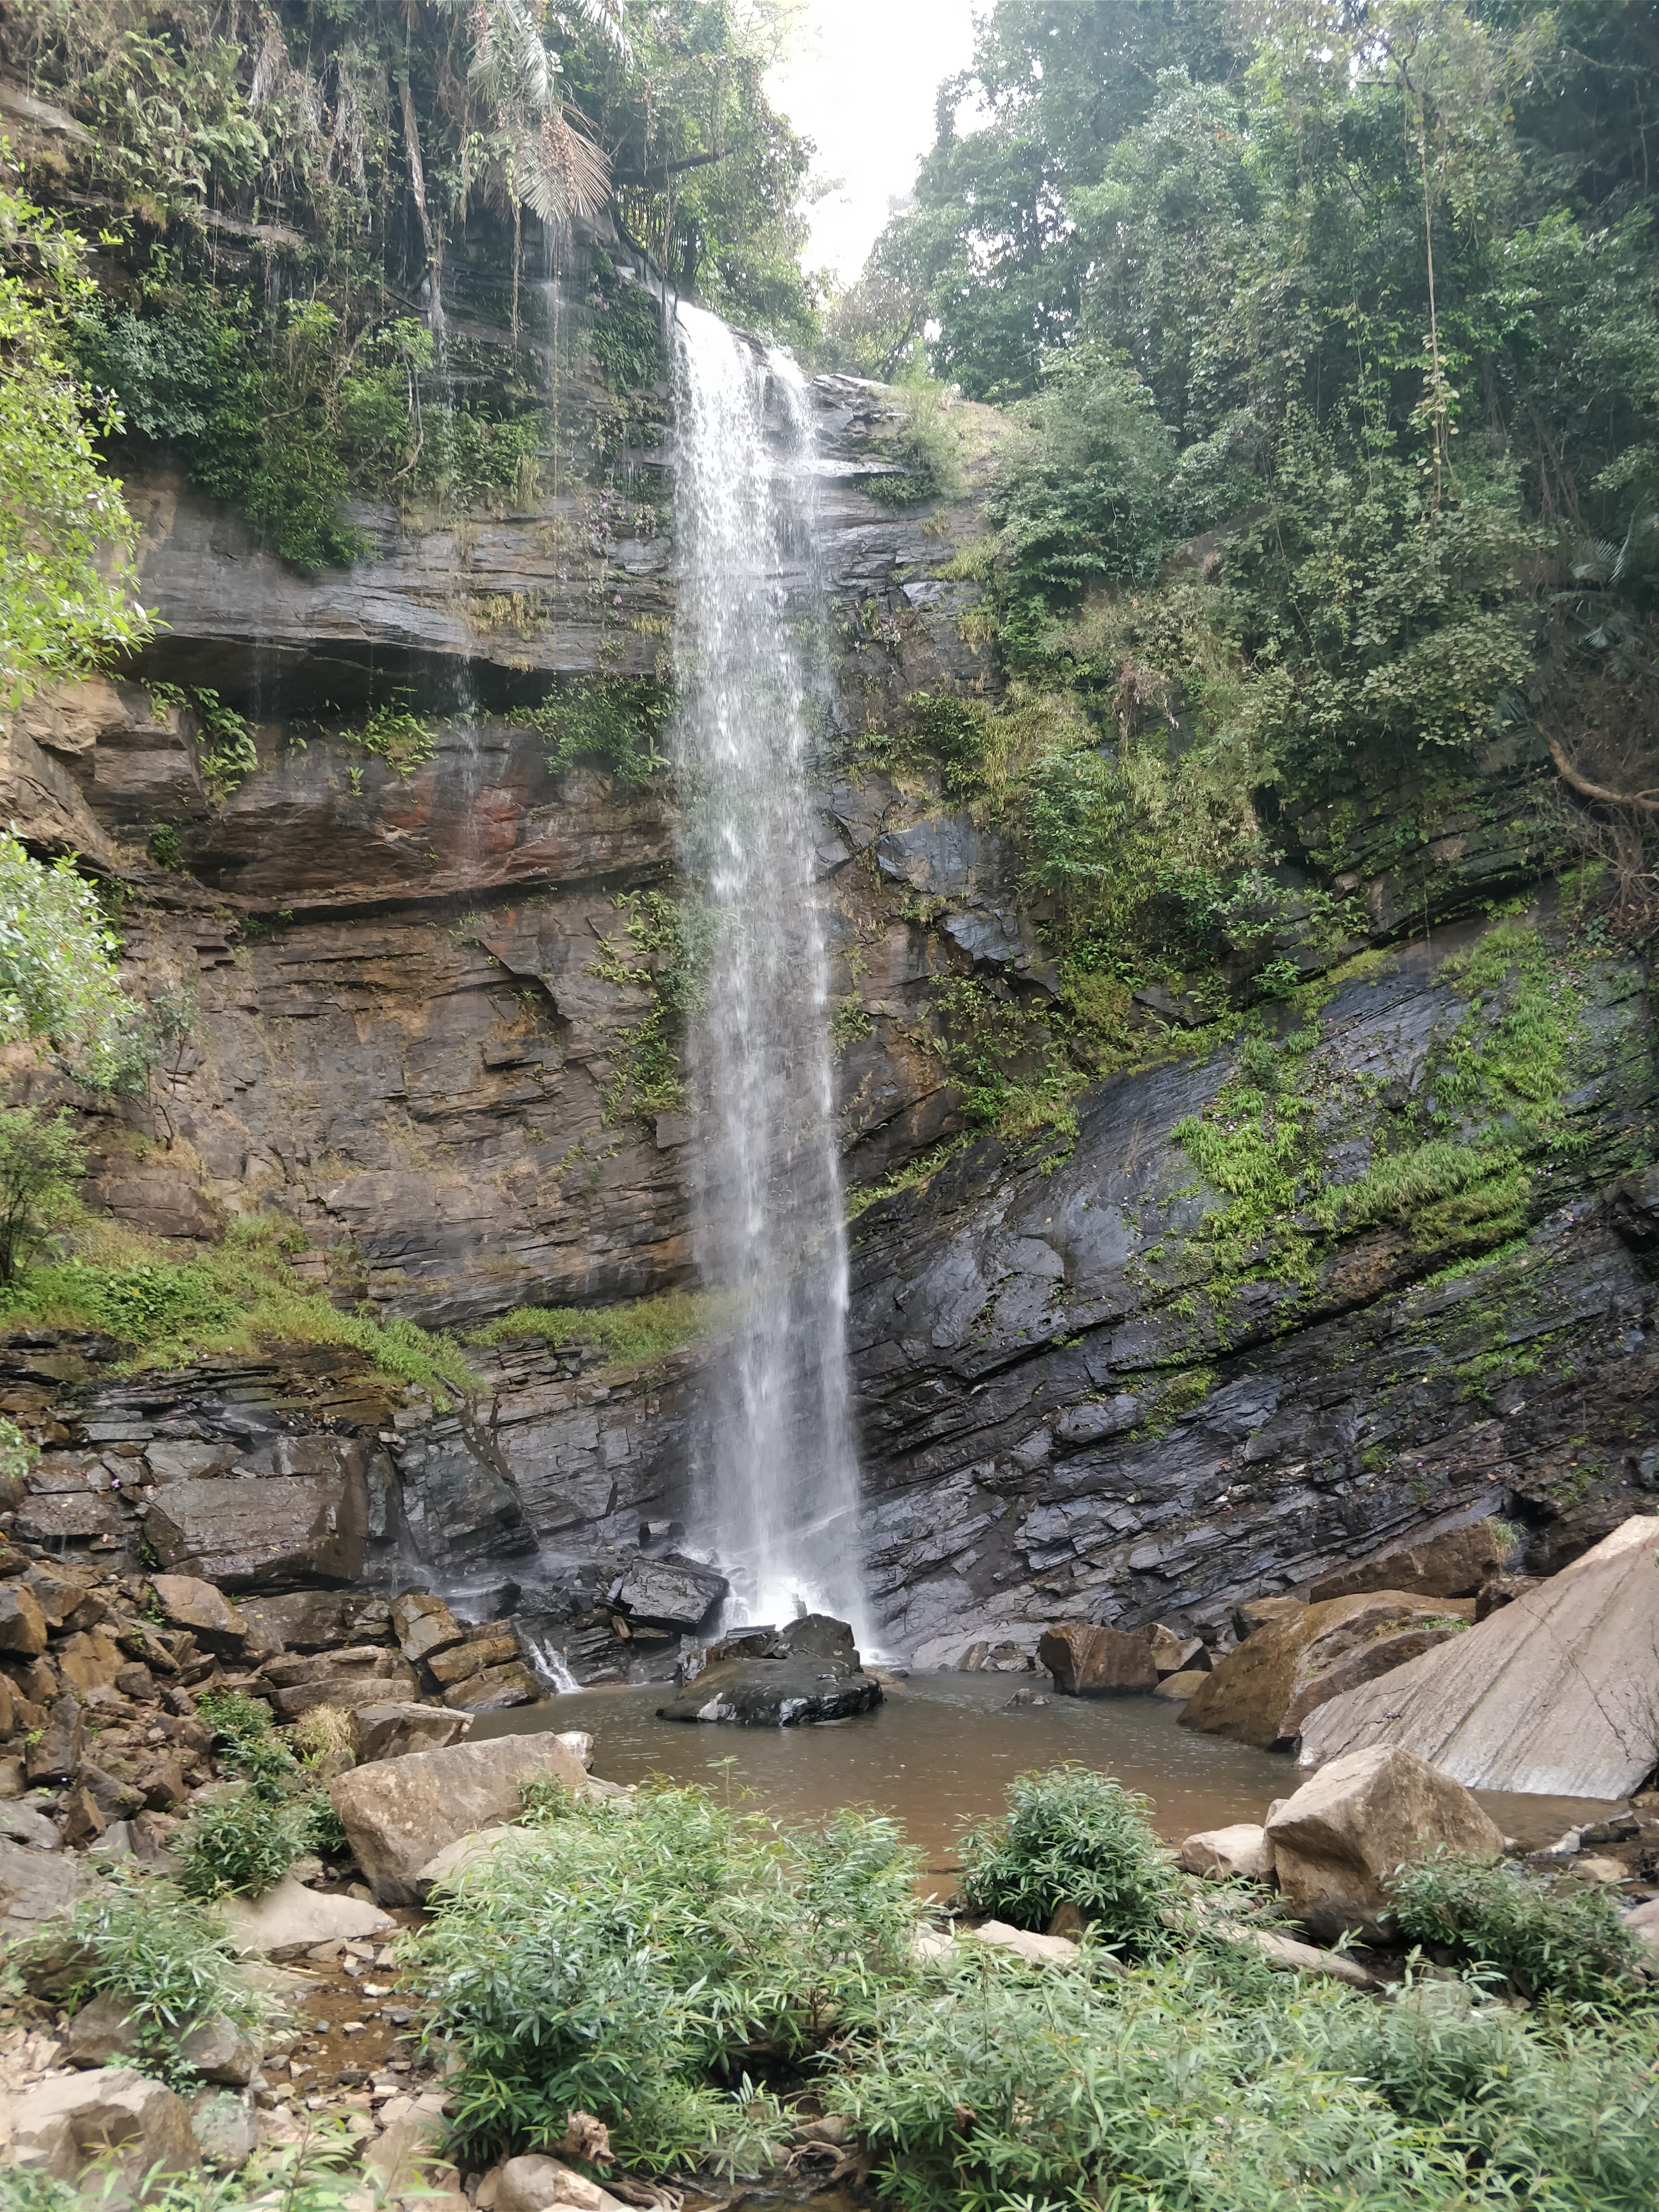 Kadamagundi/Didupe falls